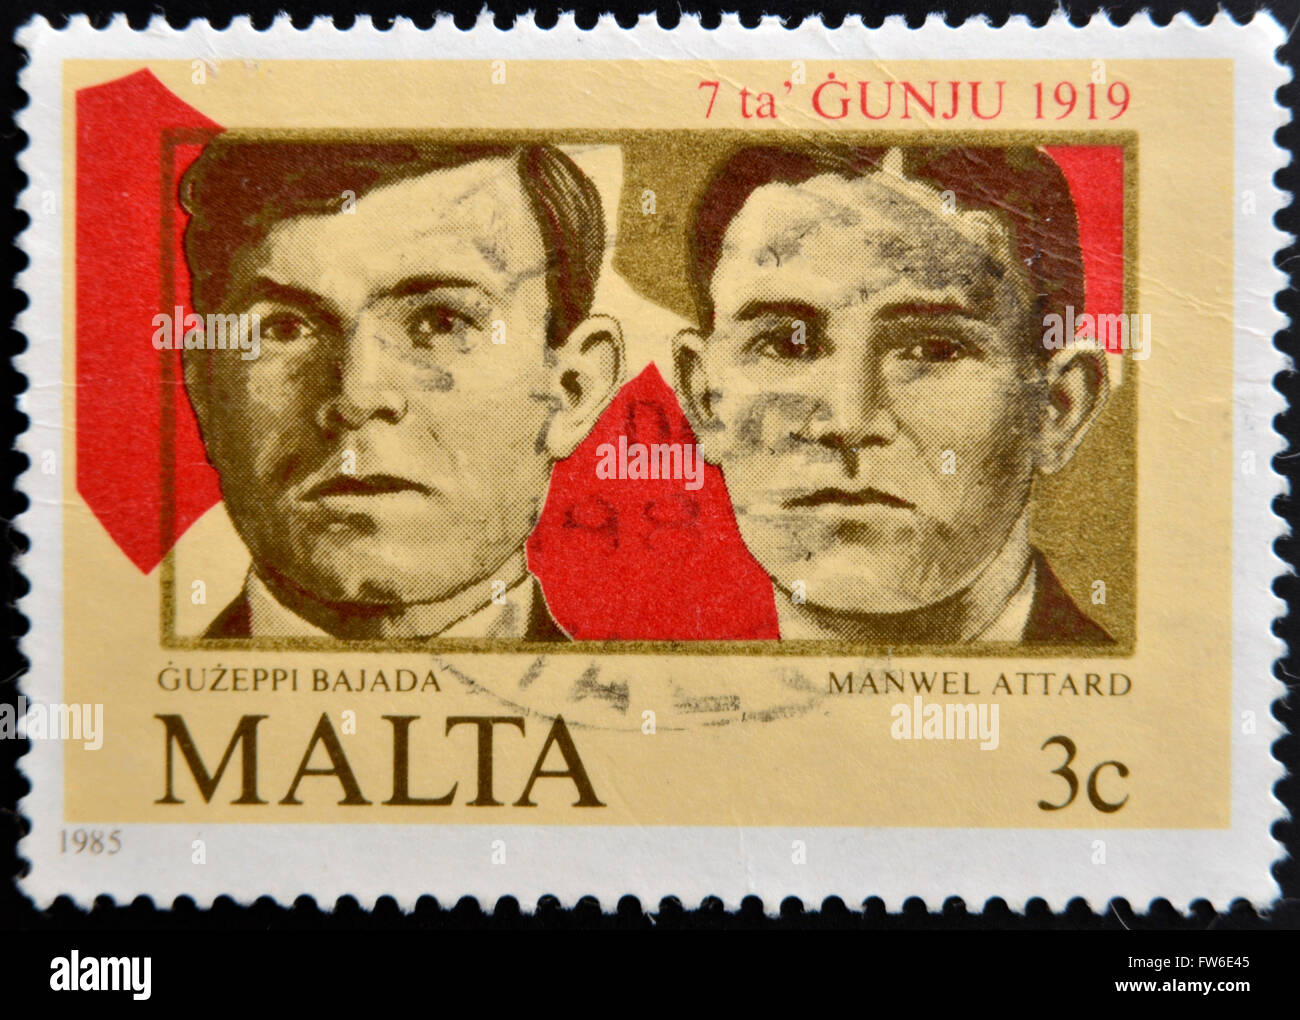 MALTA - CIRCA 1985: A stamp printed in Malta shows Guzeppi Bajada and Manwell Attard, circa 1985 Stock Photo